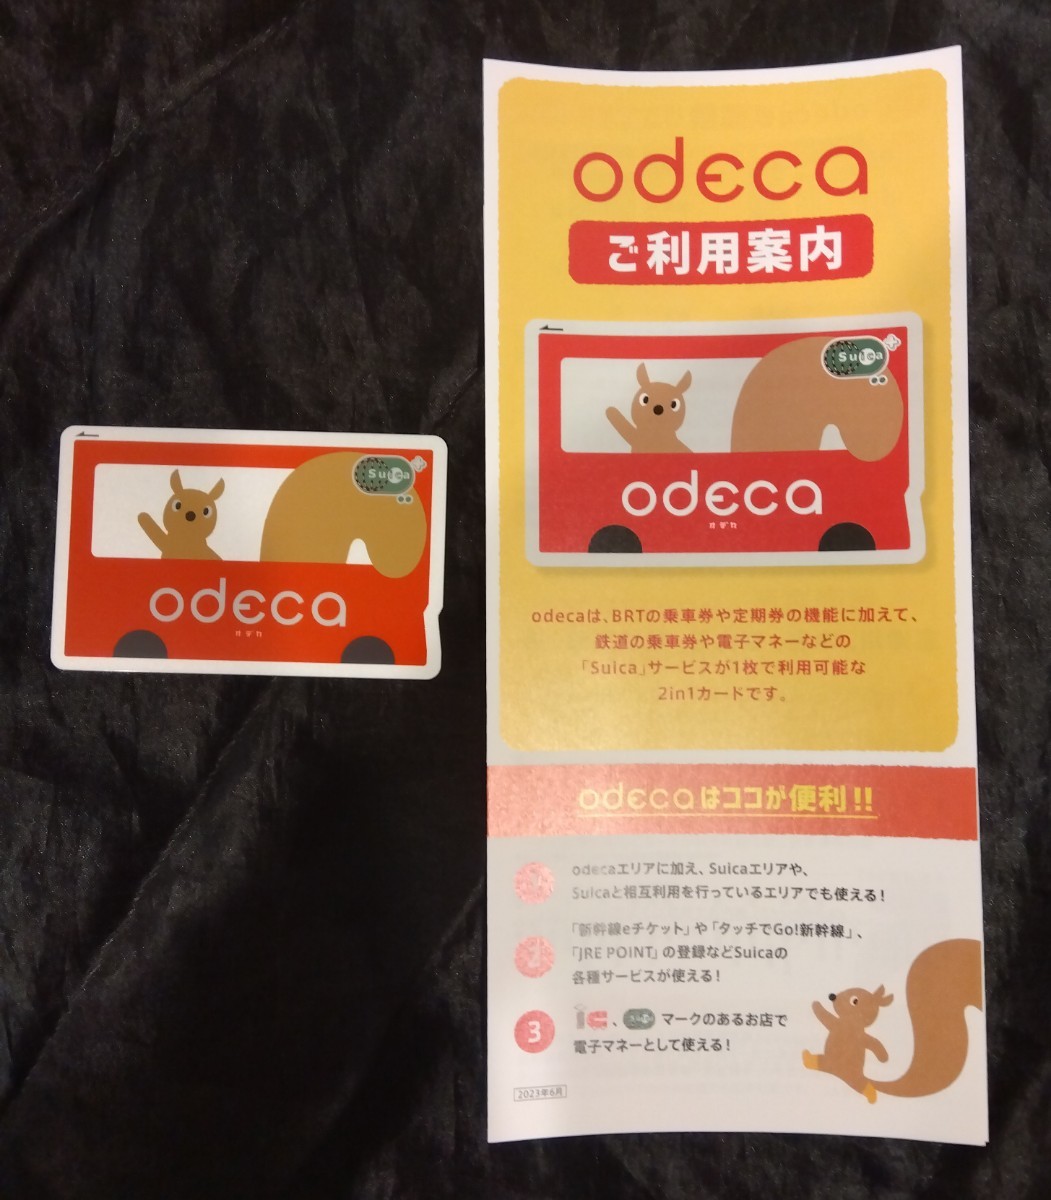 JR東日本 odeca　オデカ 残高なし　送料120円 ※交通系ICカード全国相互利用可能 チャージすれば使用可能。パンフレットが不要なら送料84円_画像1